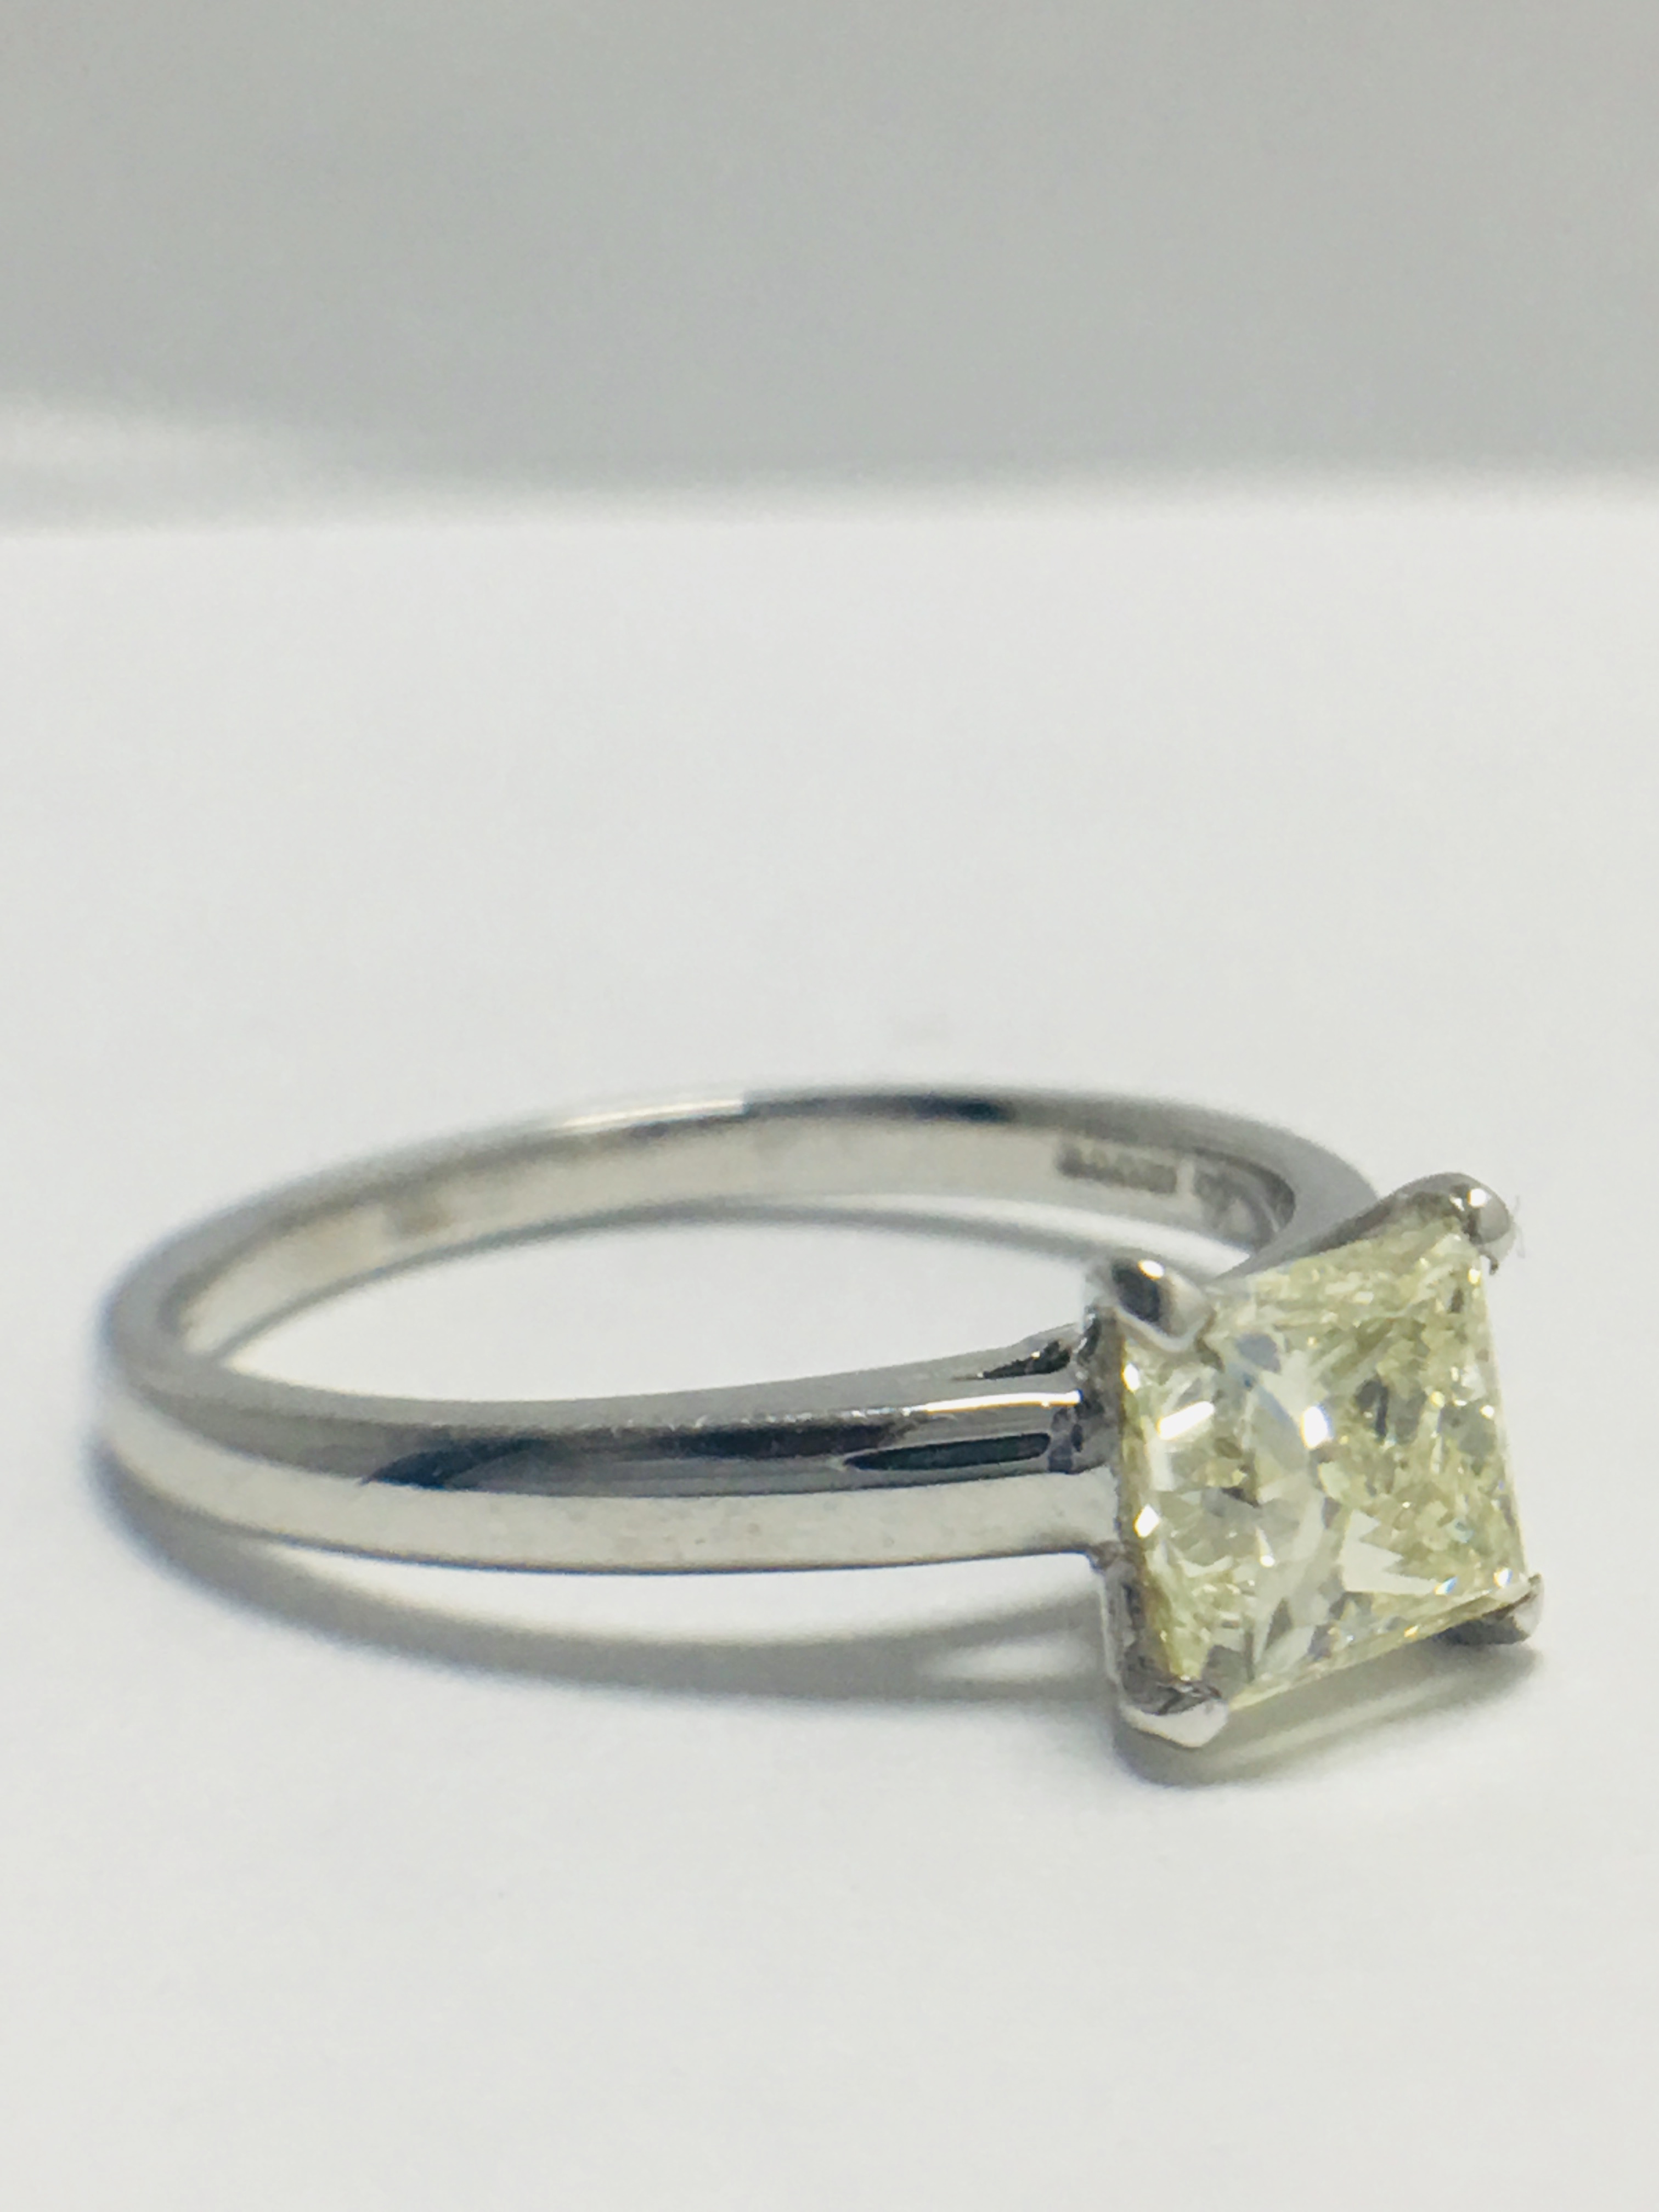 1ct Natural Princes Cut diamond platinum ring - Image 6 of 10